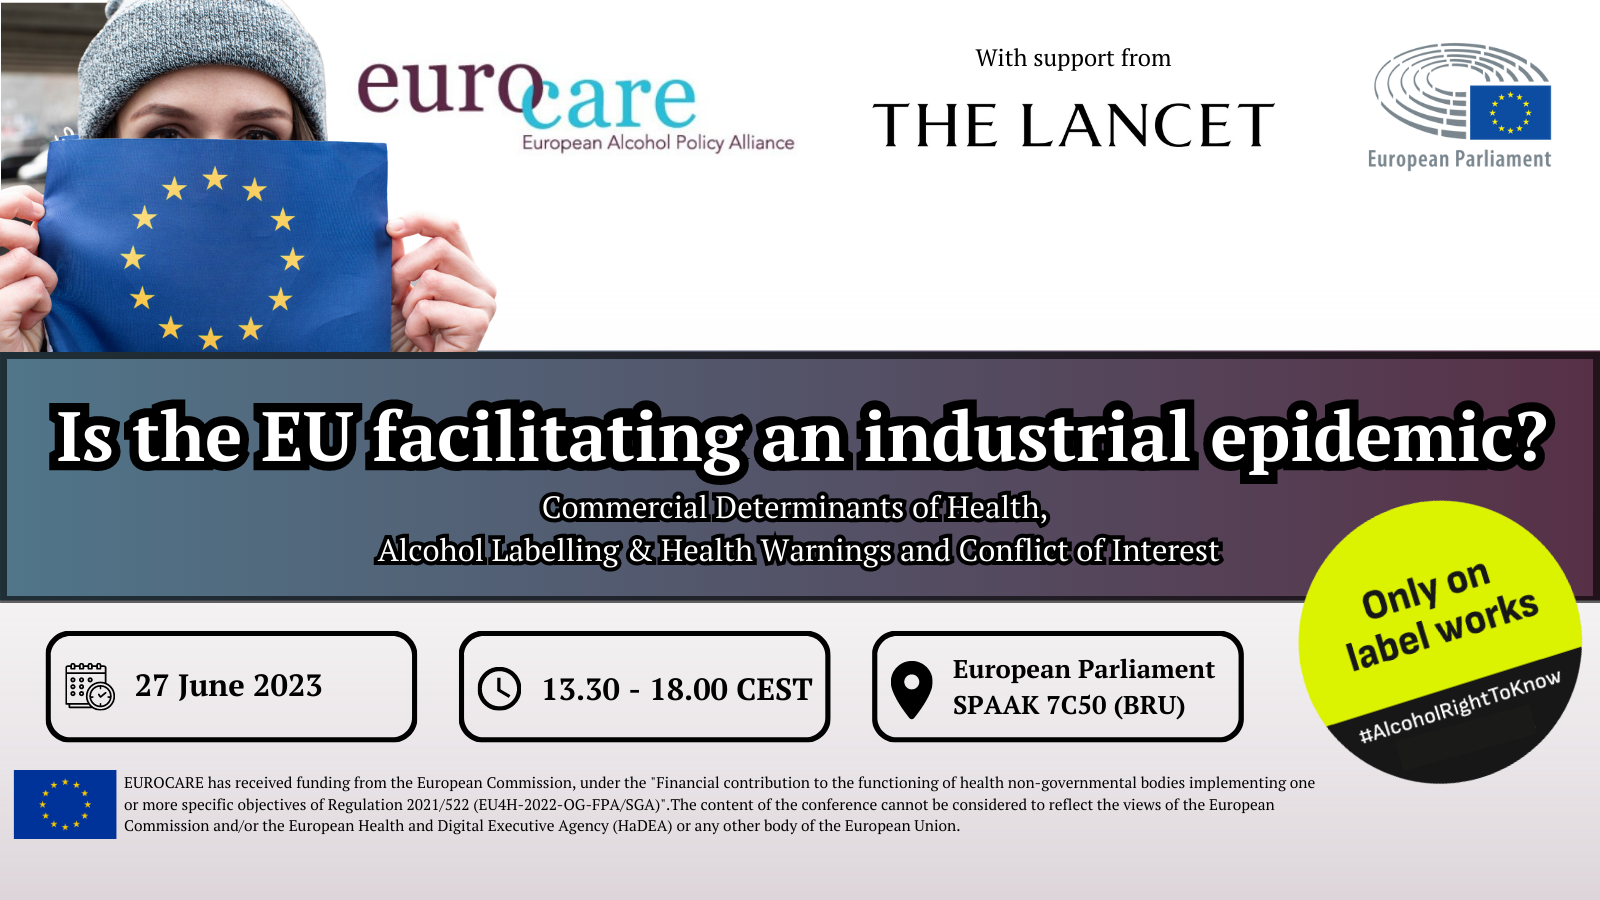 "Is the EU facilitating an industrial epidemic?"